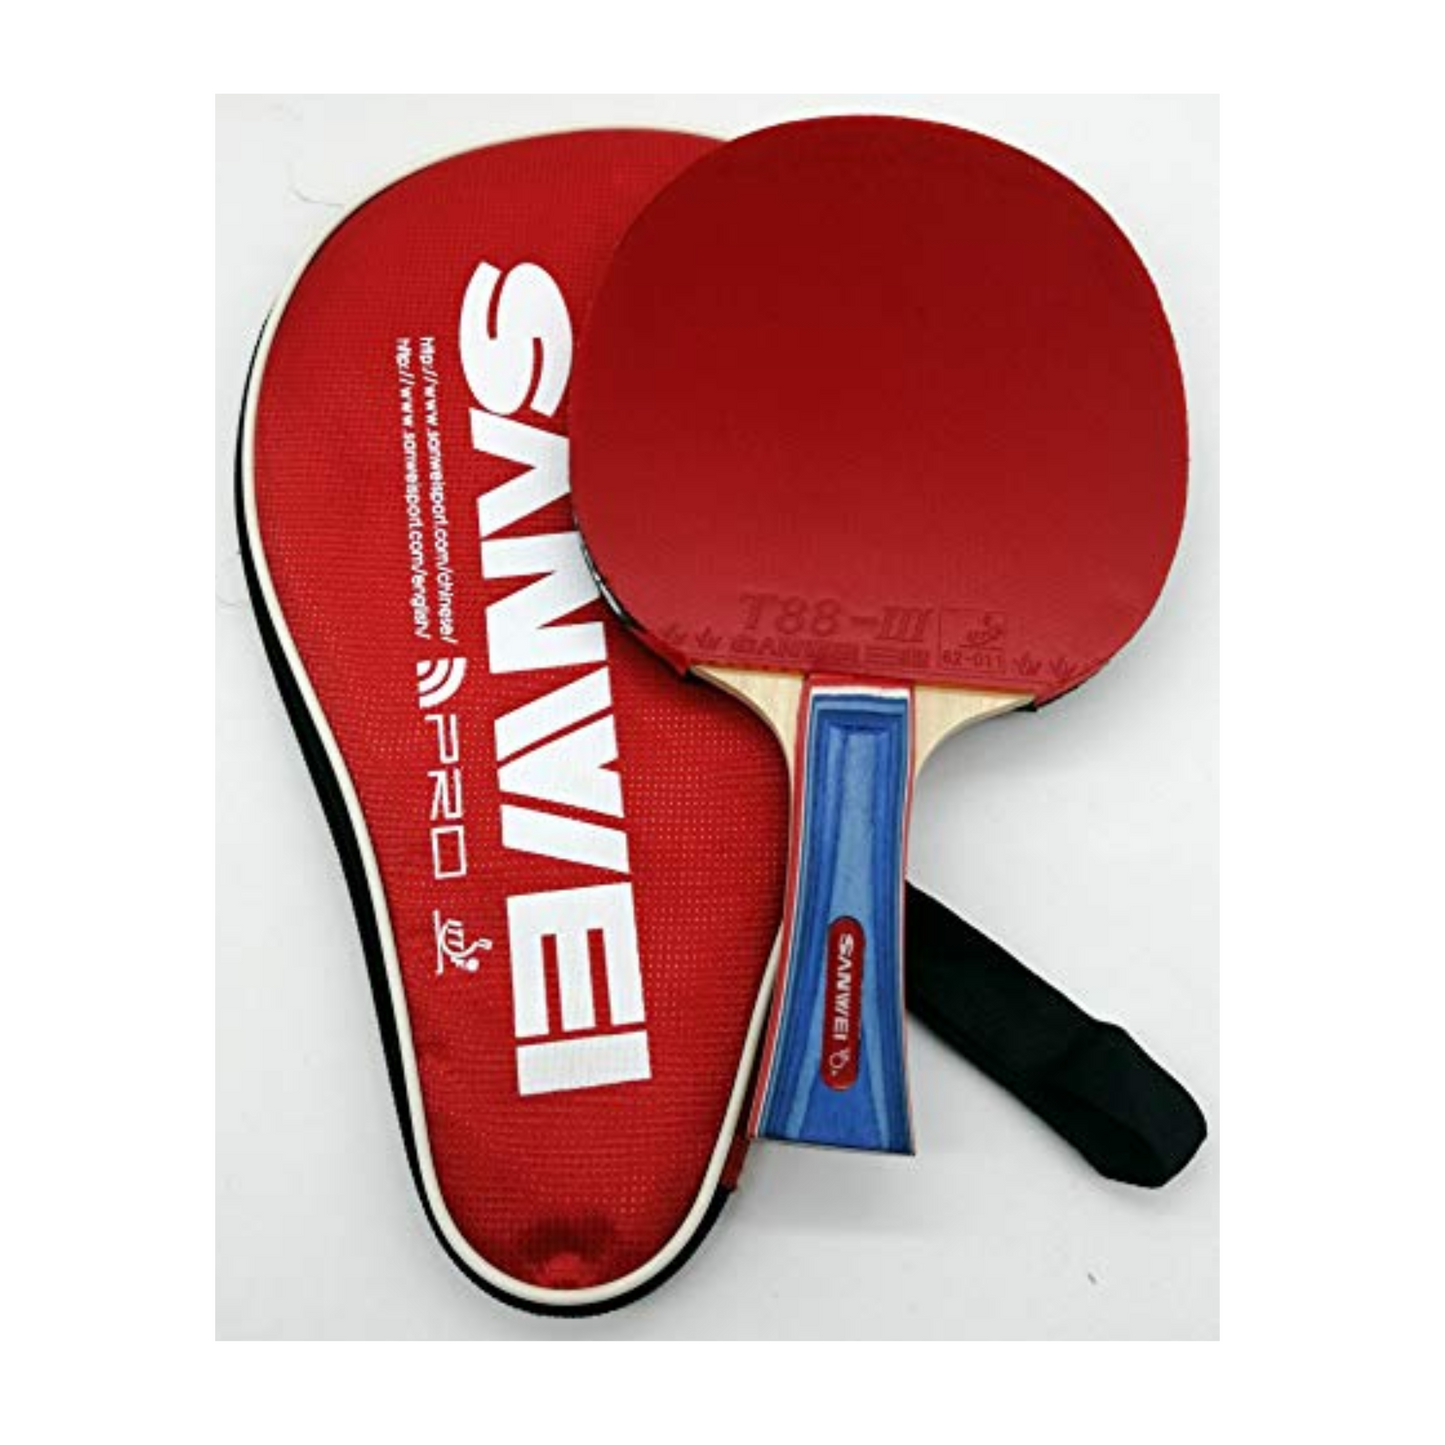 Sanwei T88-III Table Tennis Bat with case